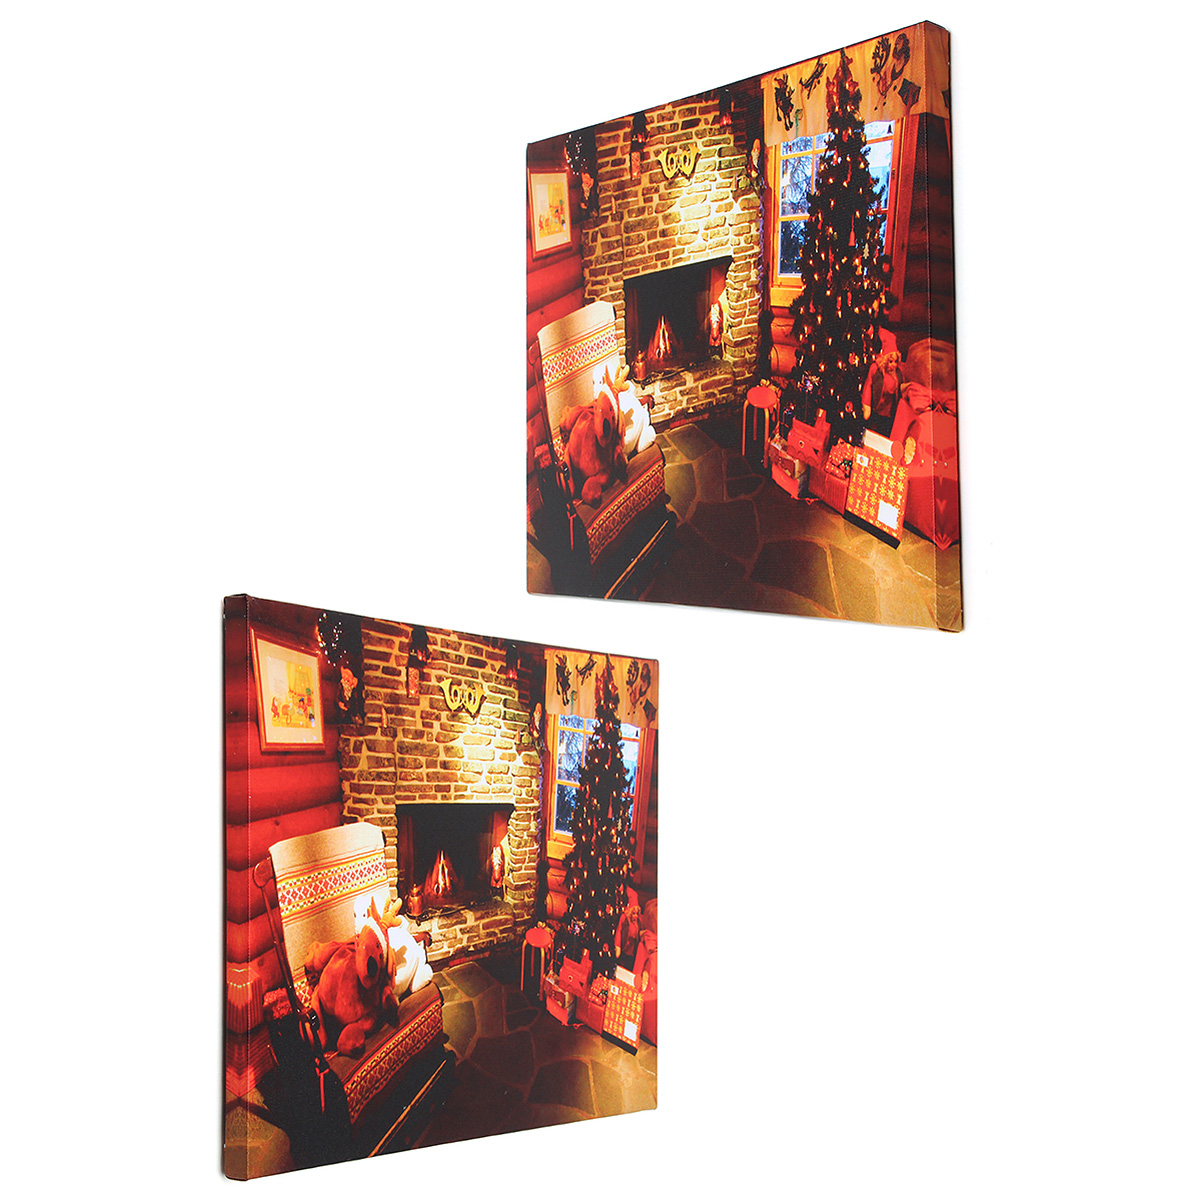 40 x 30cm Operated LED Home Christmas Decor Tree Xmas Canvas Print Wall Art